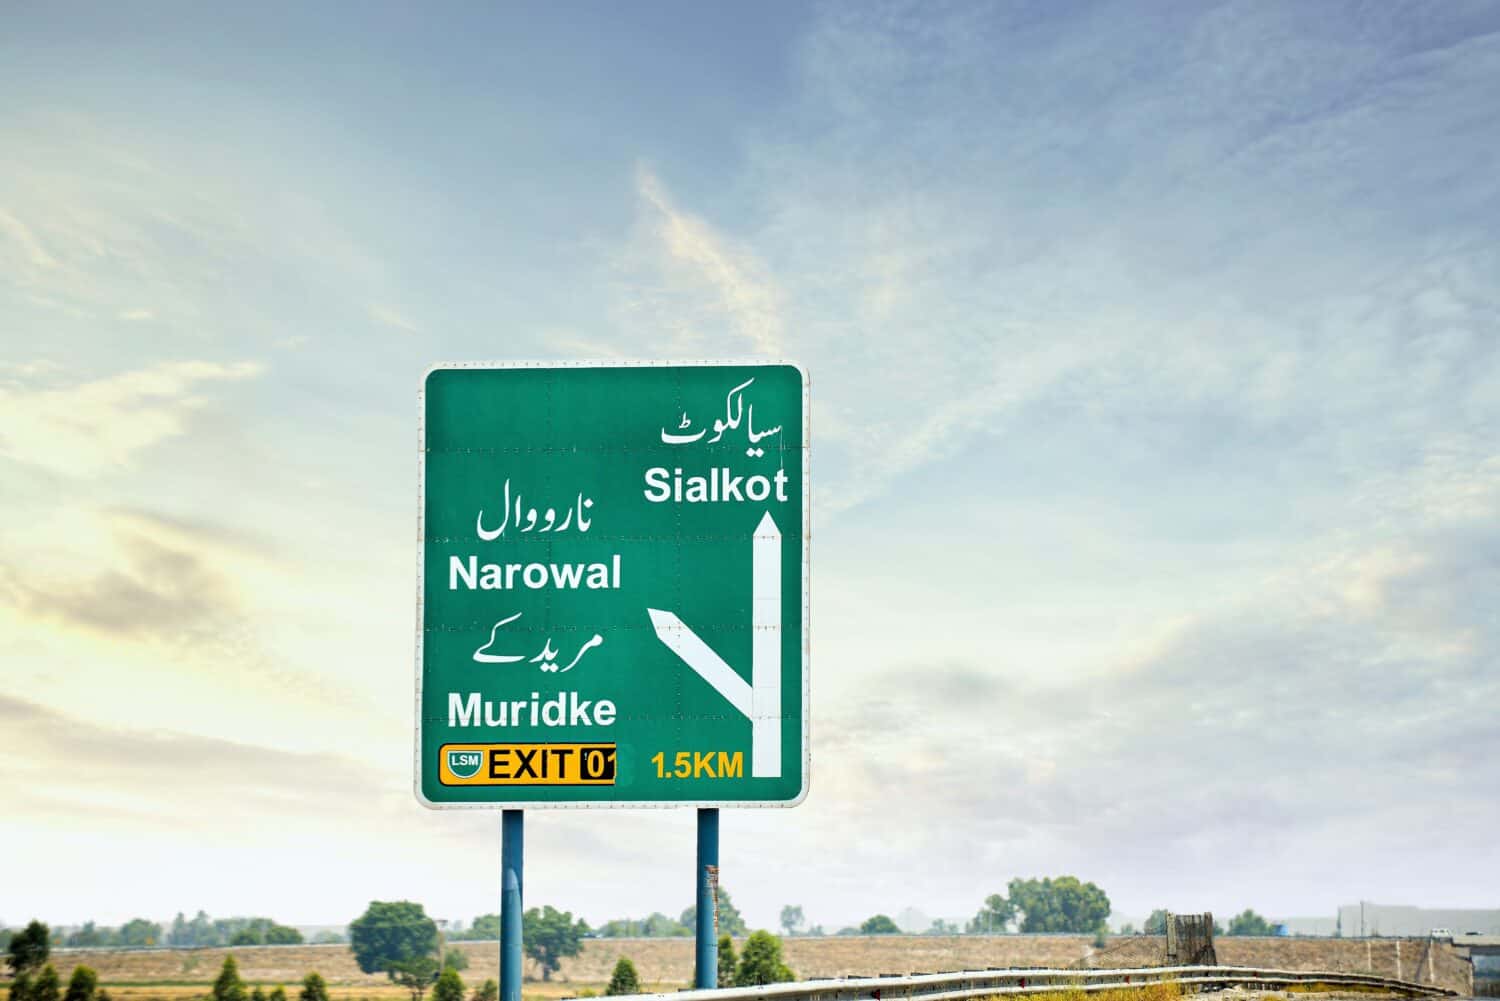 Road sign indicating exits towards sialkot, narowal and muridke on motorway in punjab pakistan